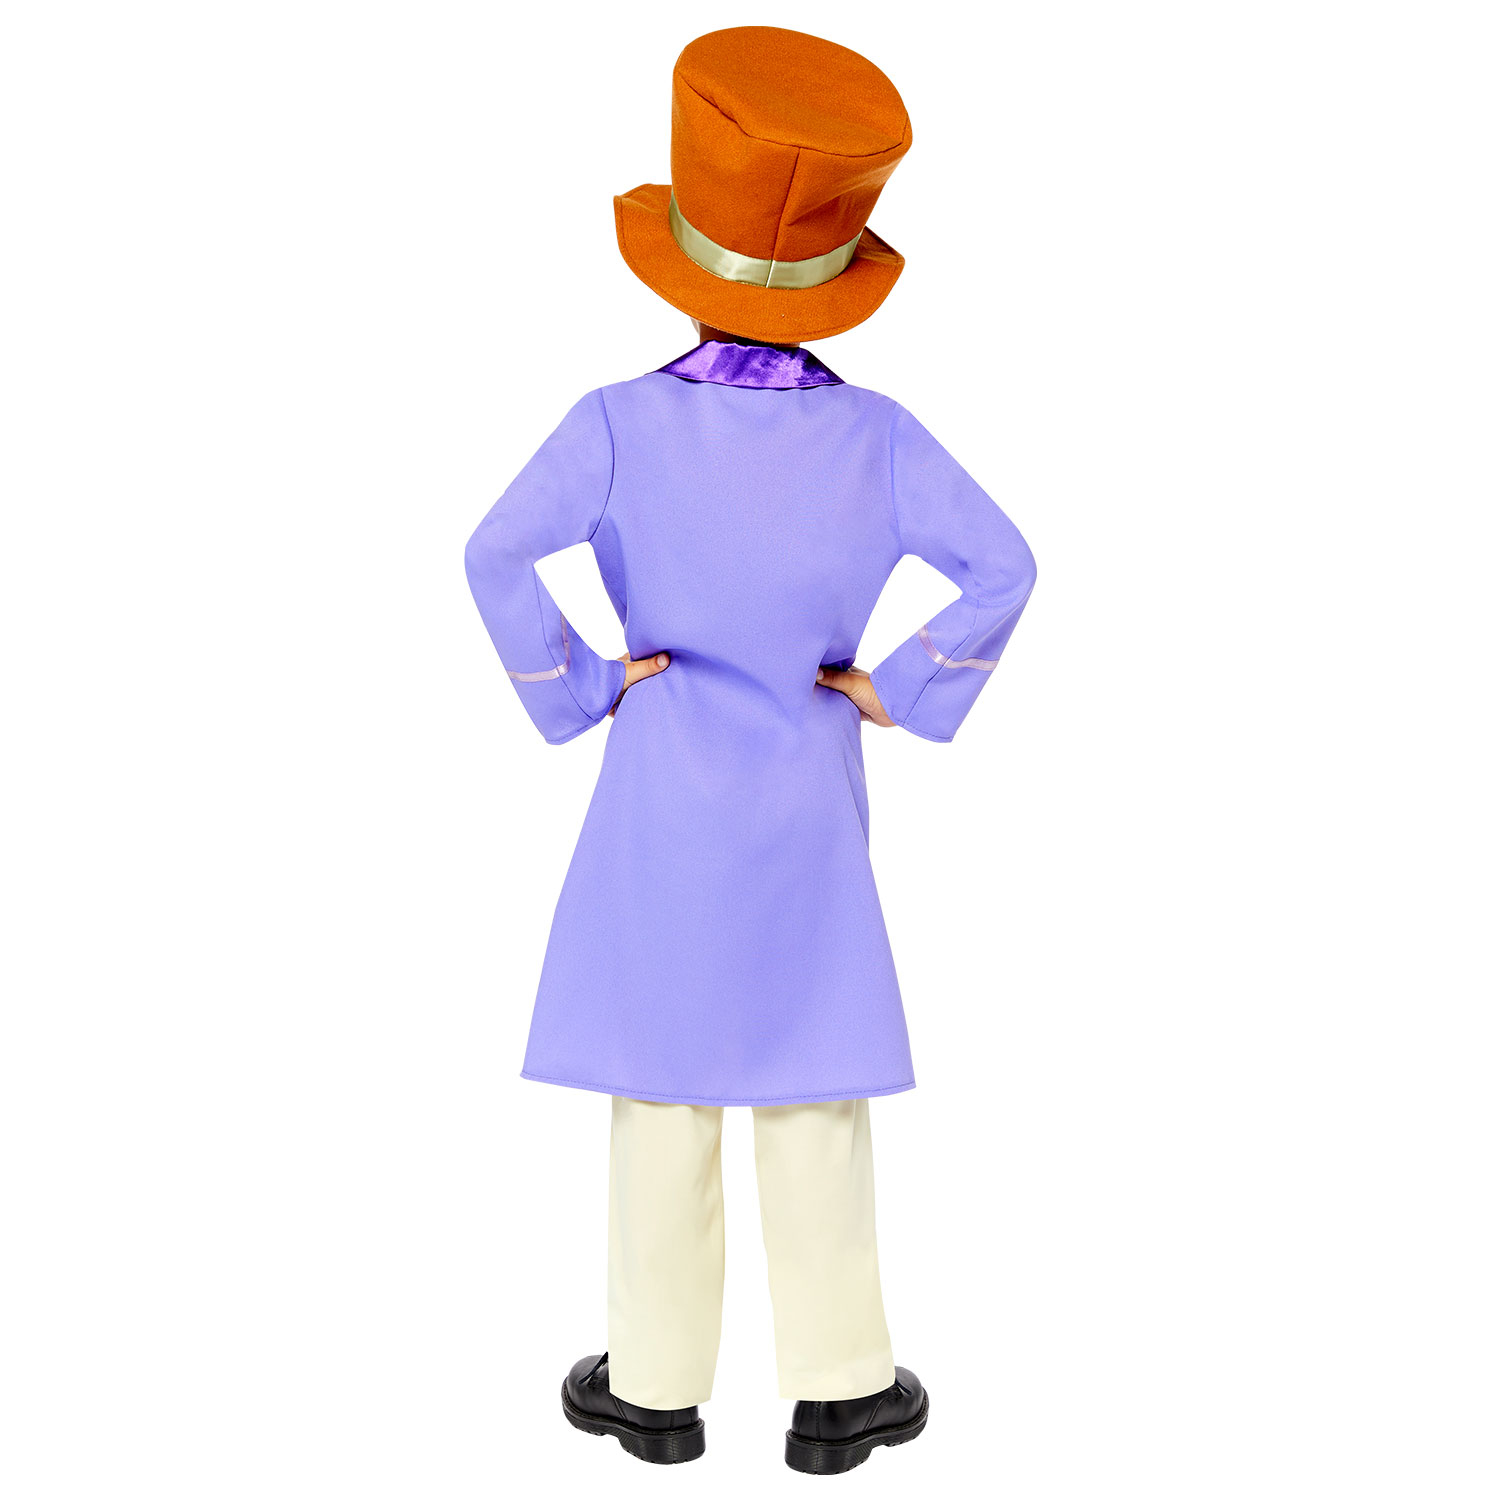 Willy Wonka Costume - Age 4-6 Years - 1 PC : Amscan International